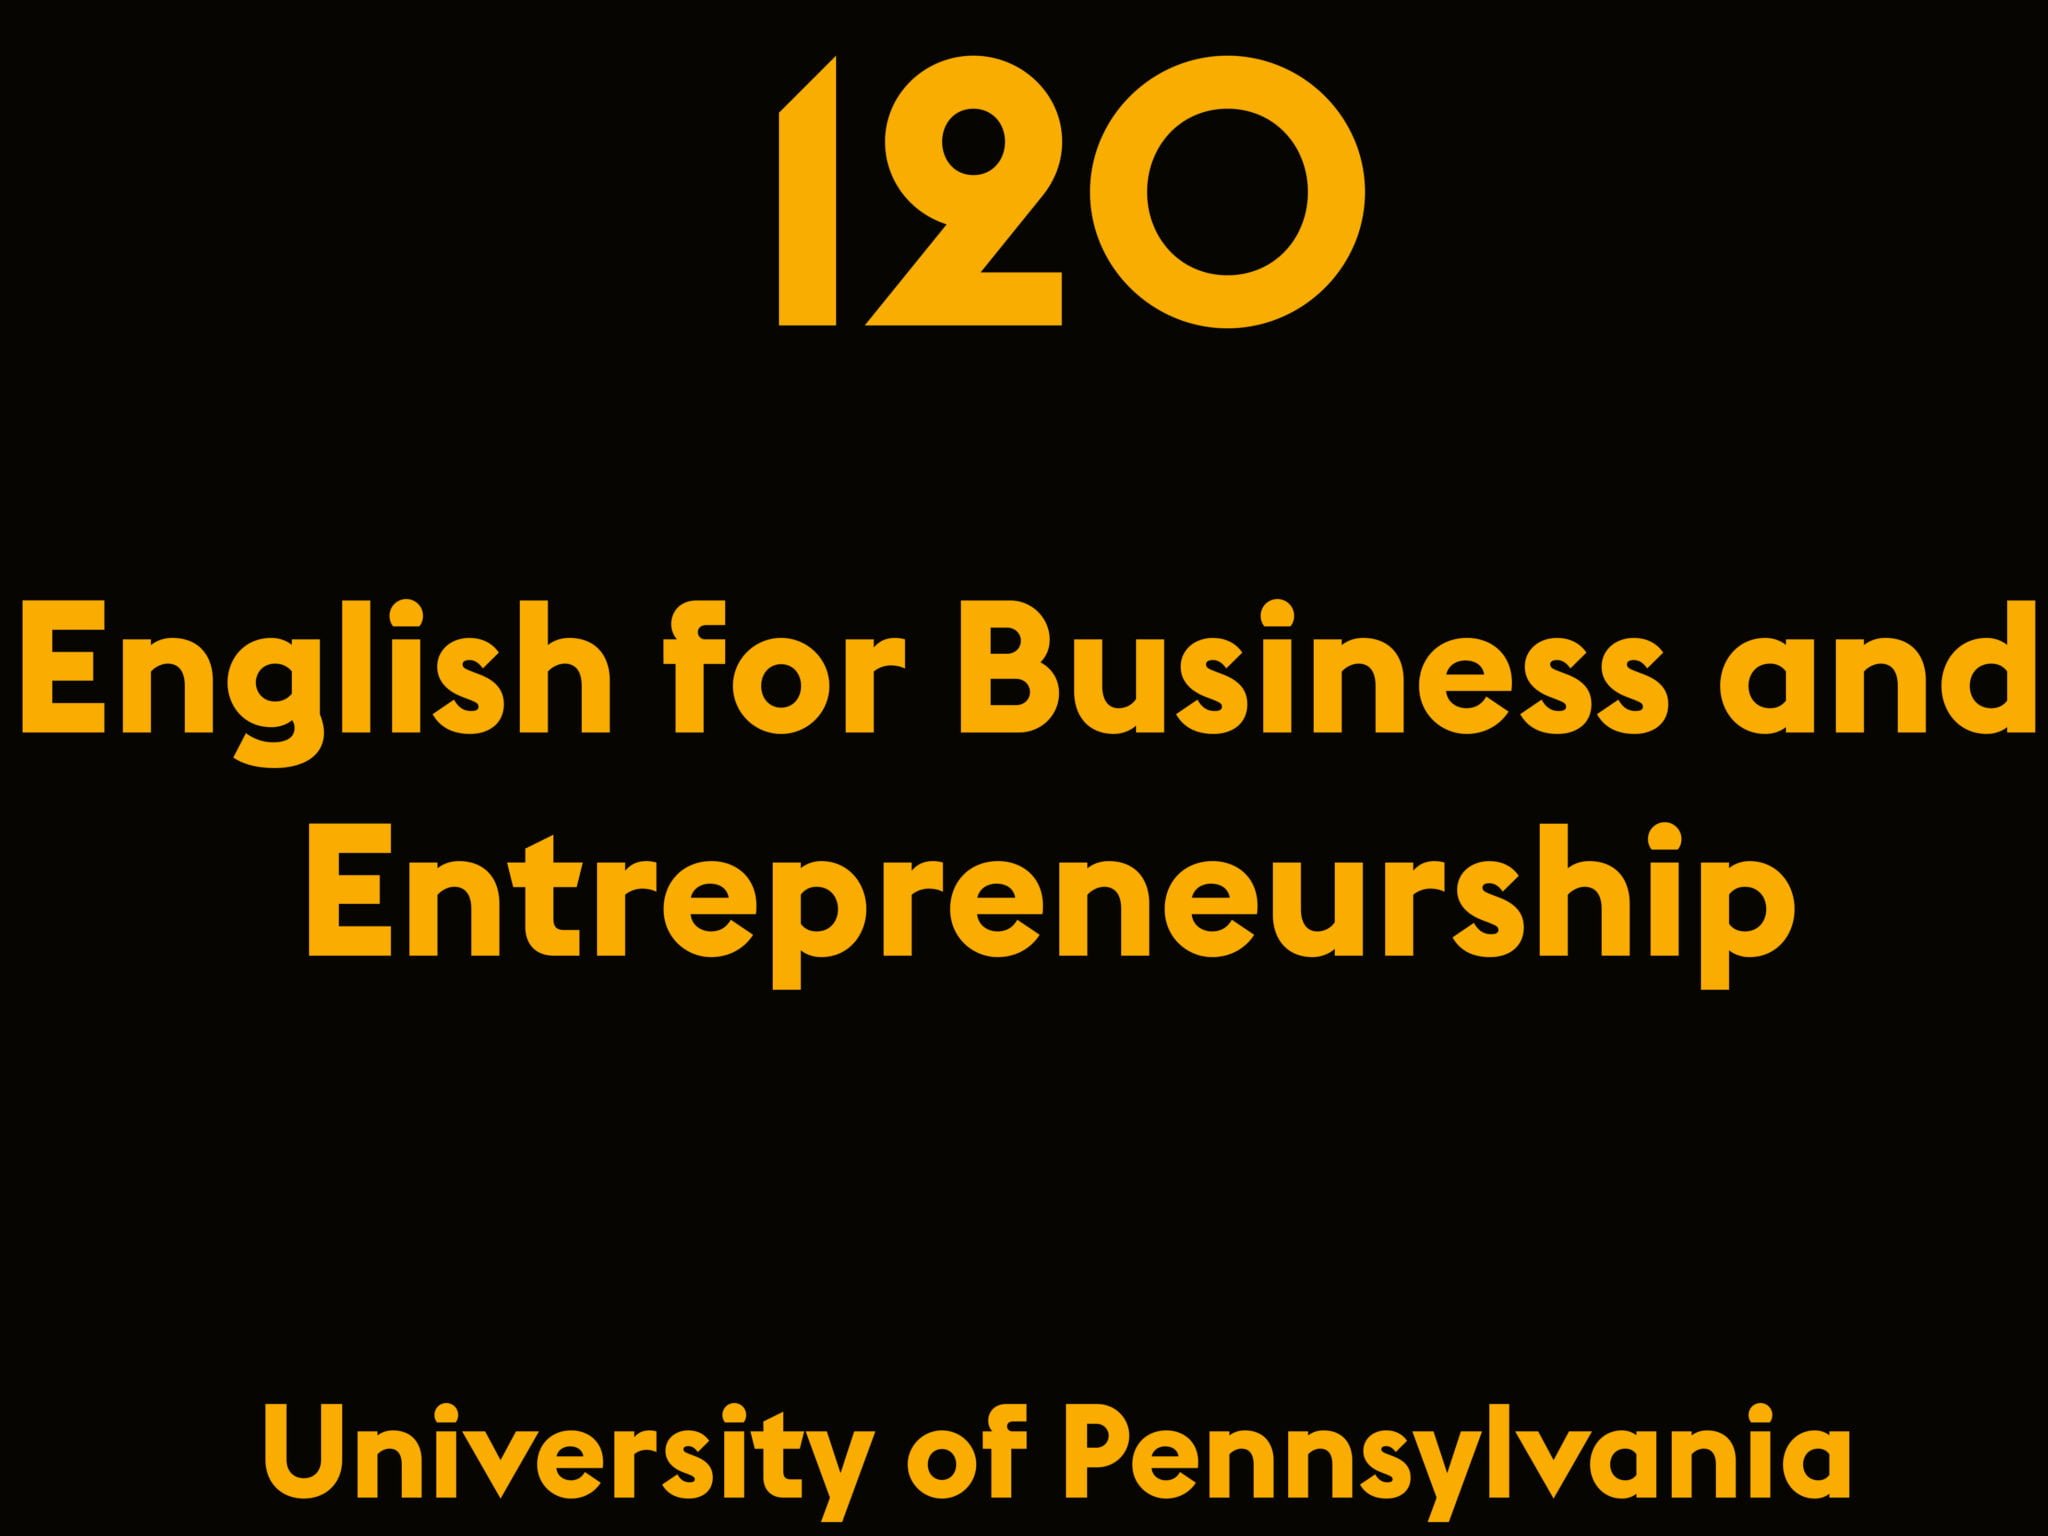 English for Business and Entrepreneurship